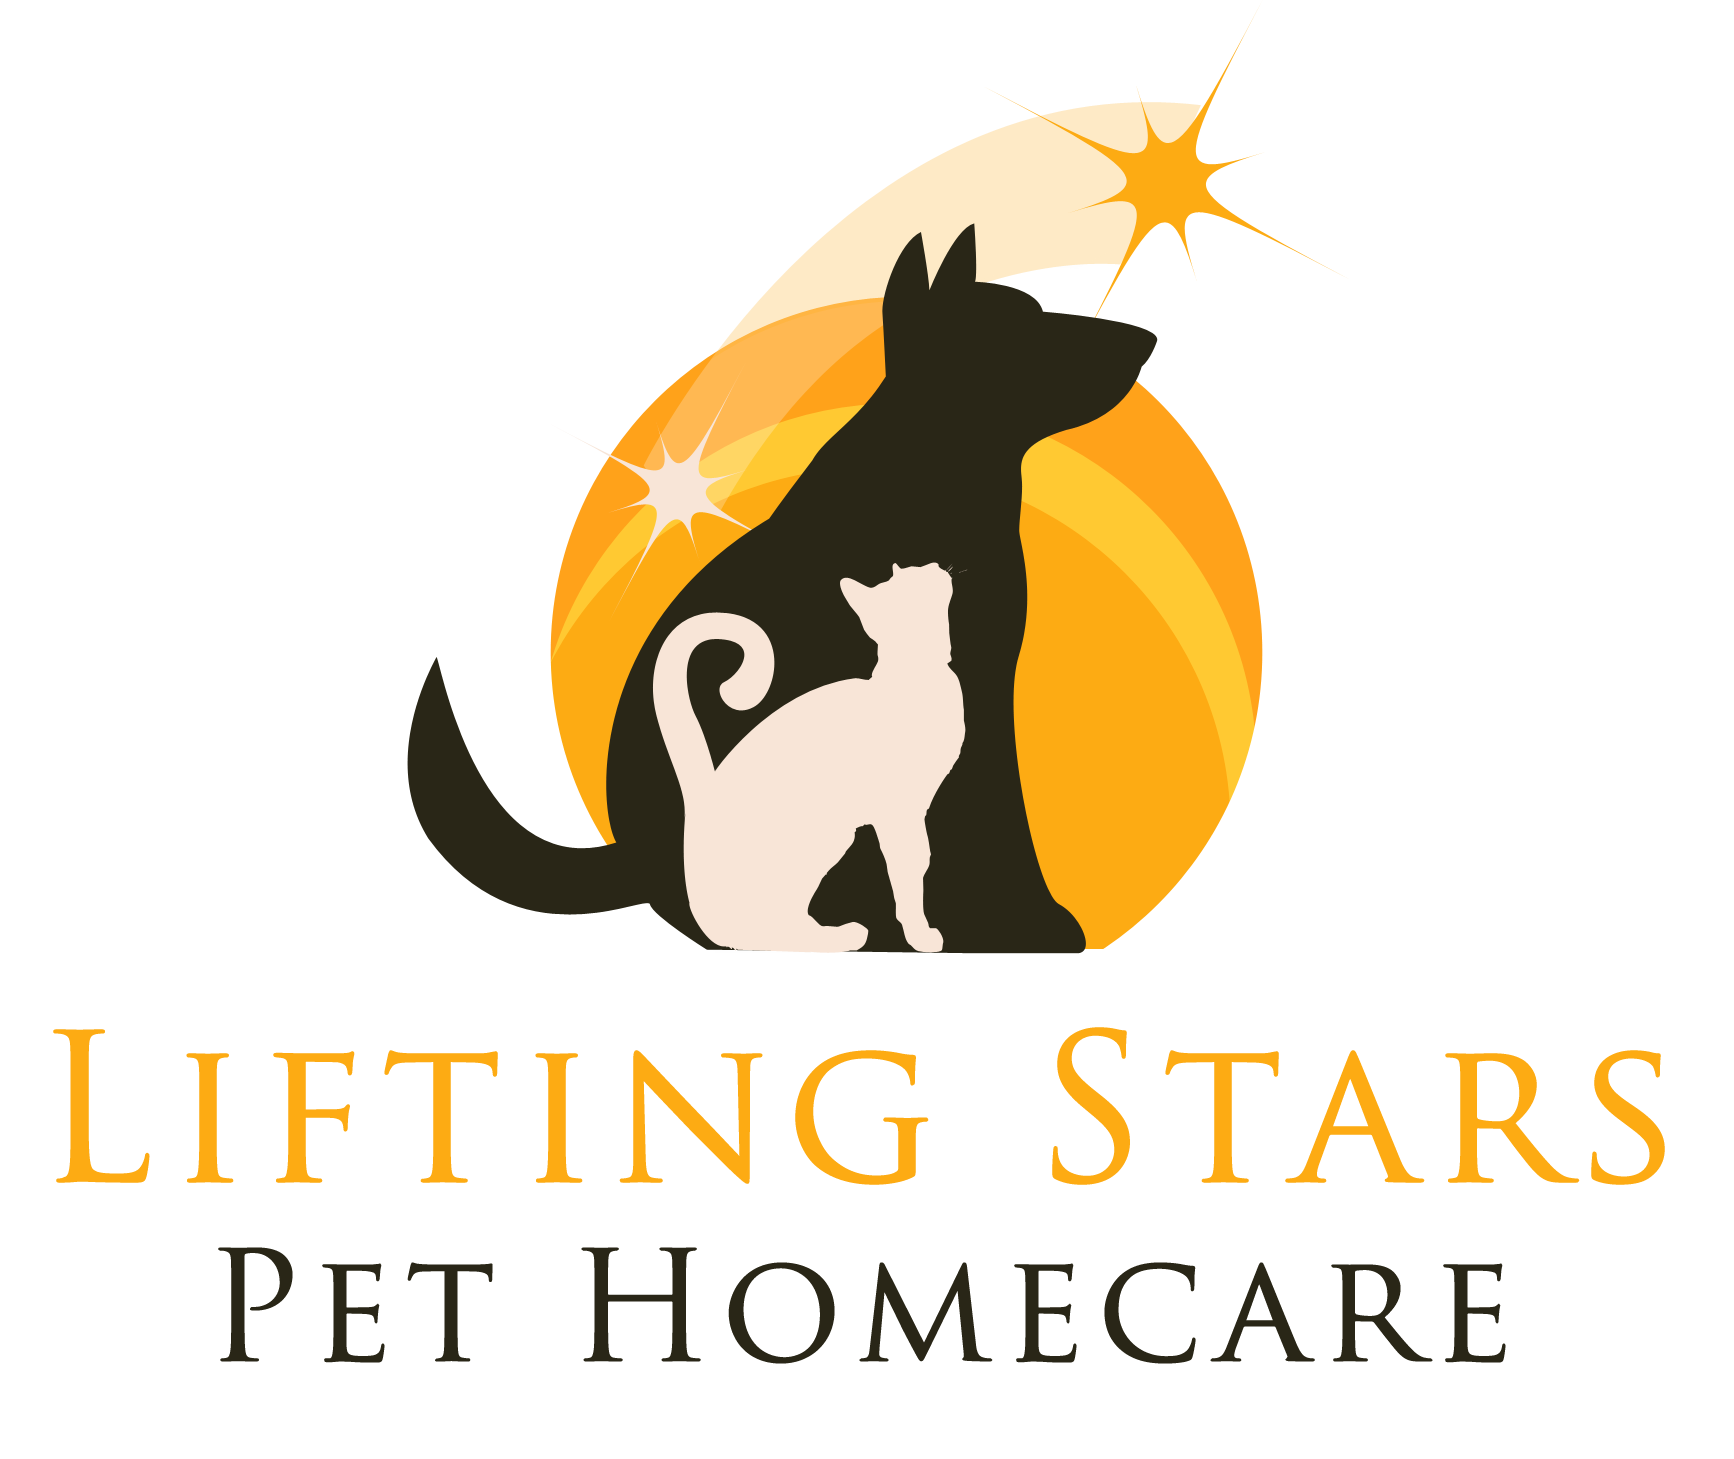 Lifting Stars Pet Homecare